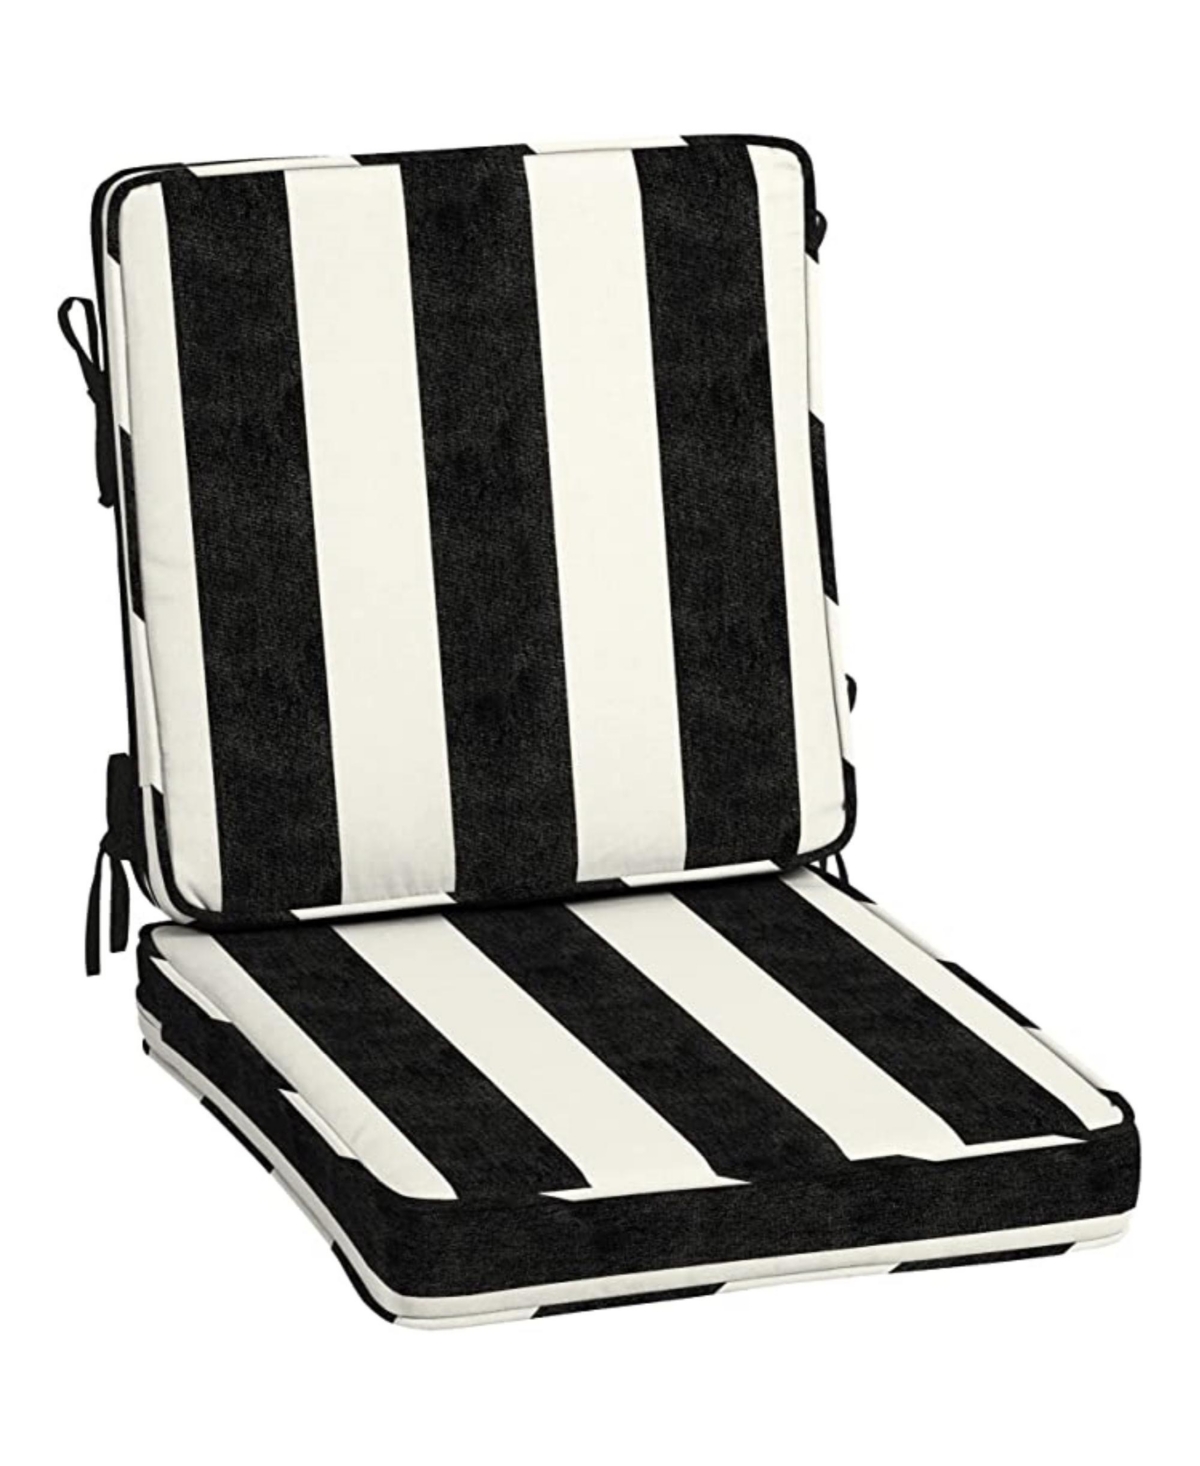 Acrylic Foam Chair Cushion 20In x 20In Black Cabana - Black